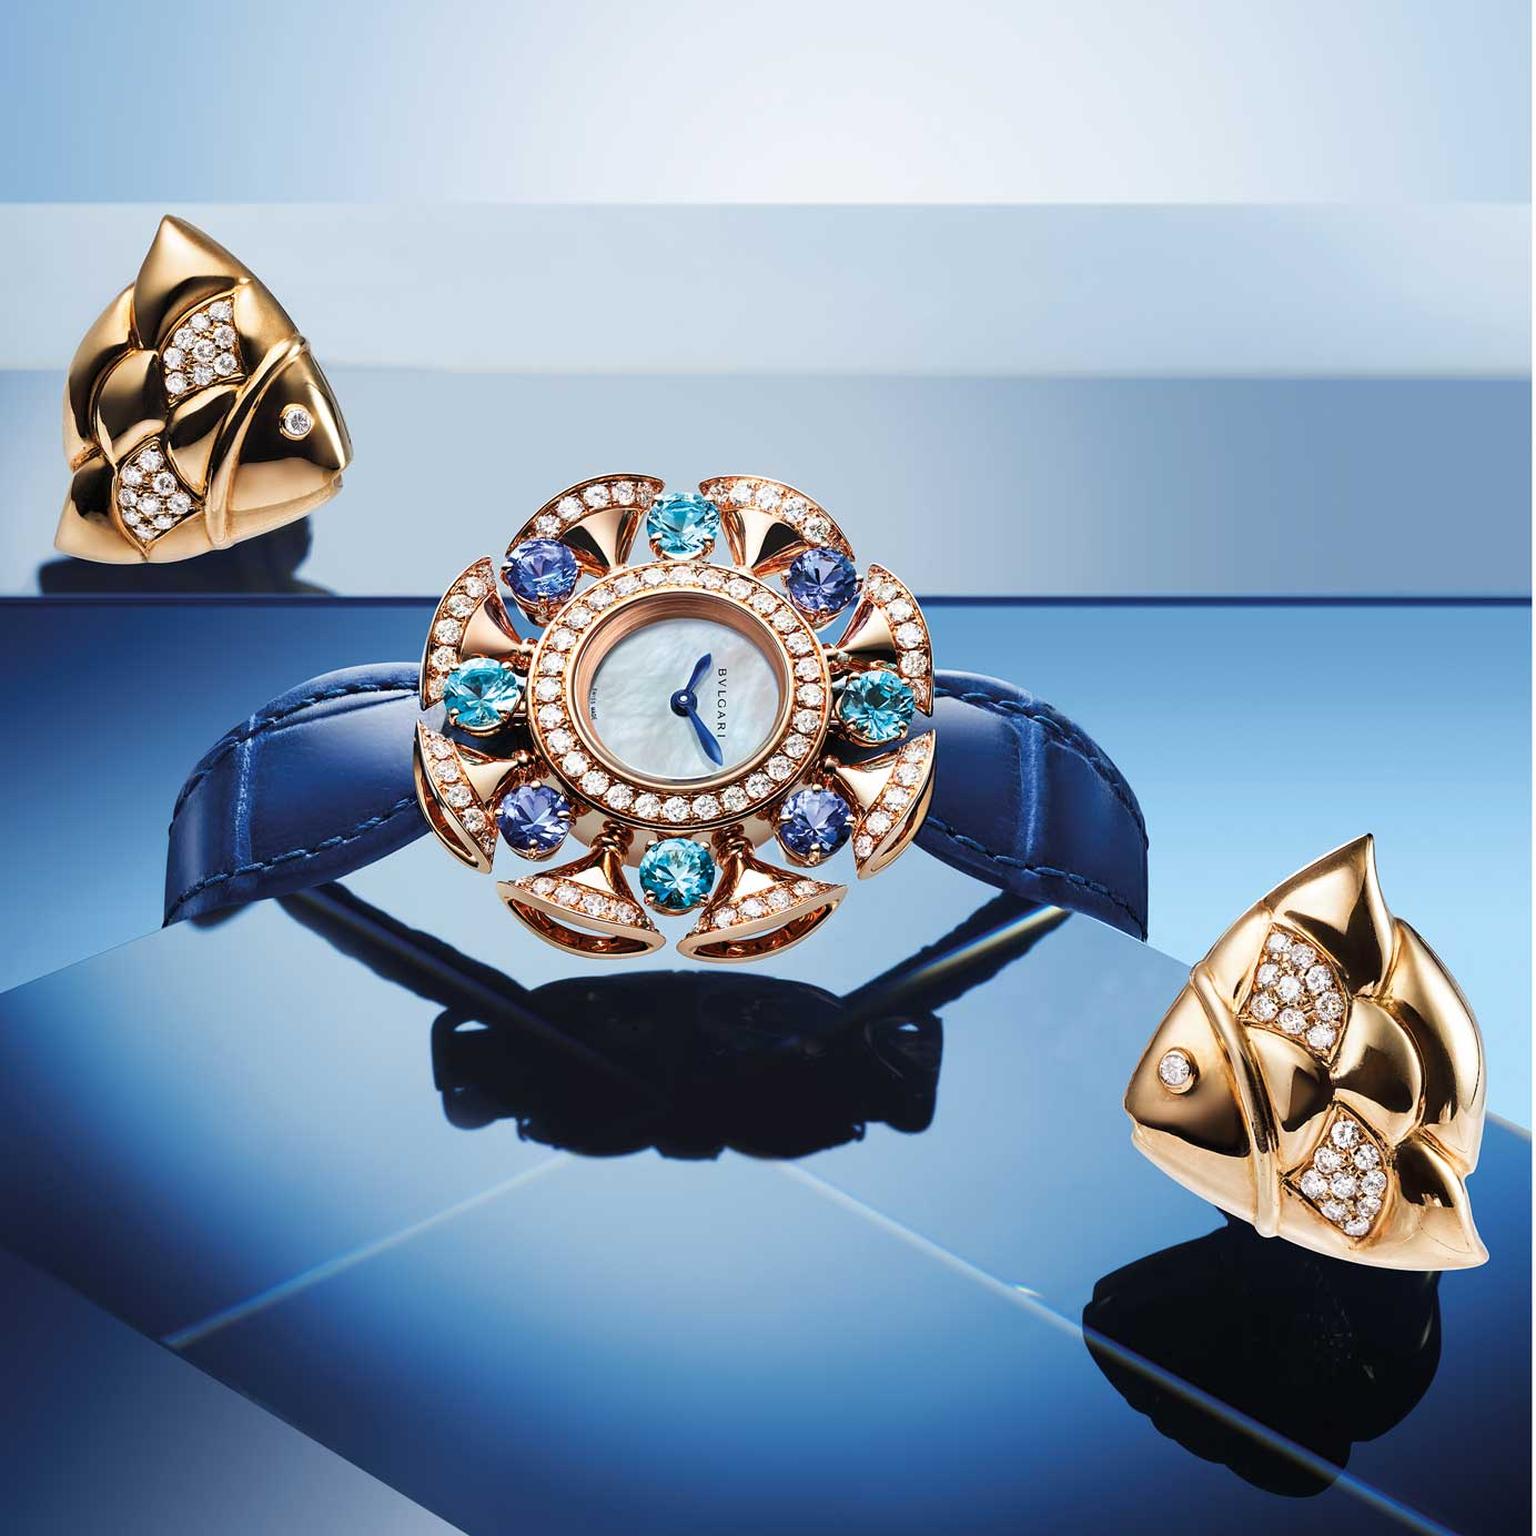 Bulgari Divas Dream topaz and tanzanite watch and vintage earrings